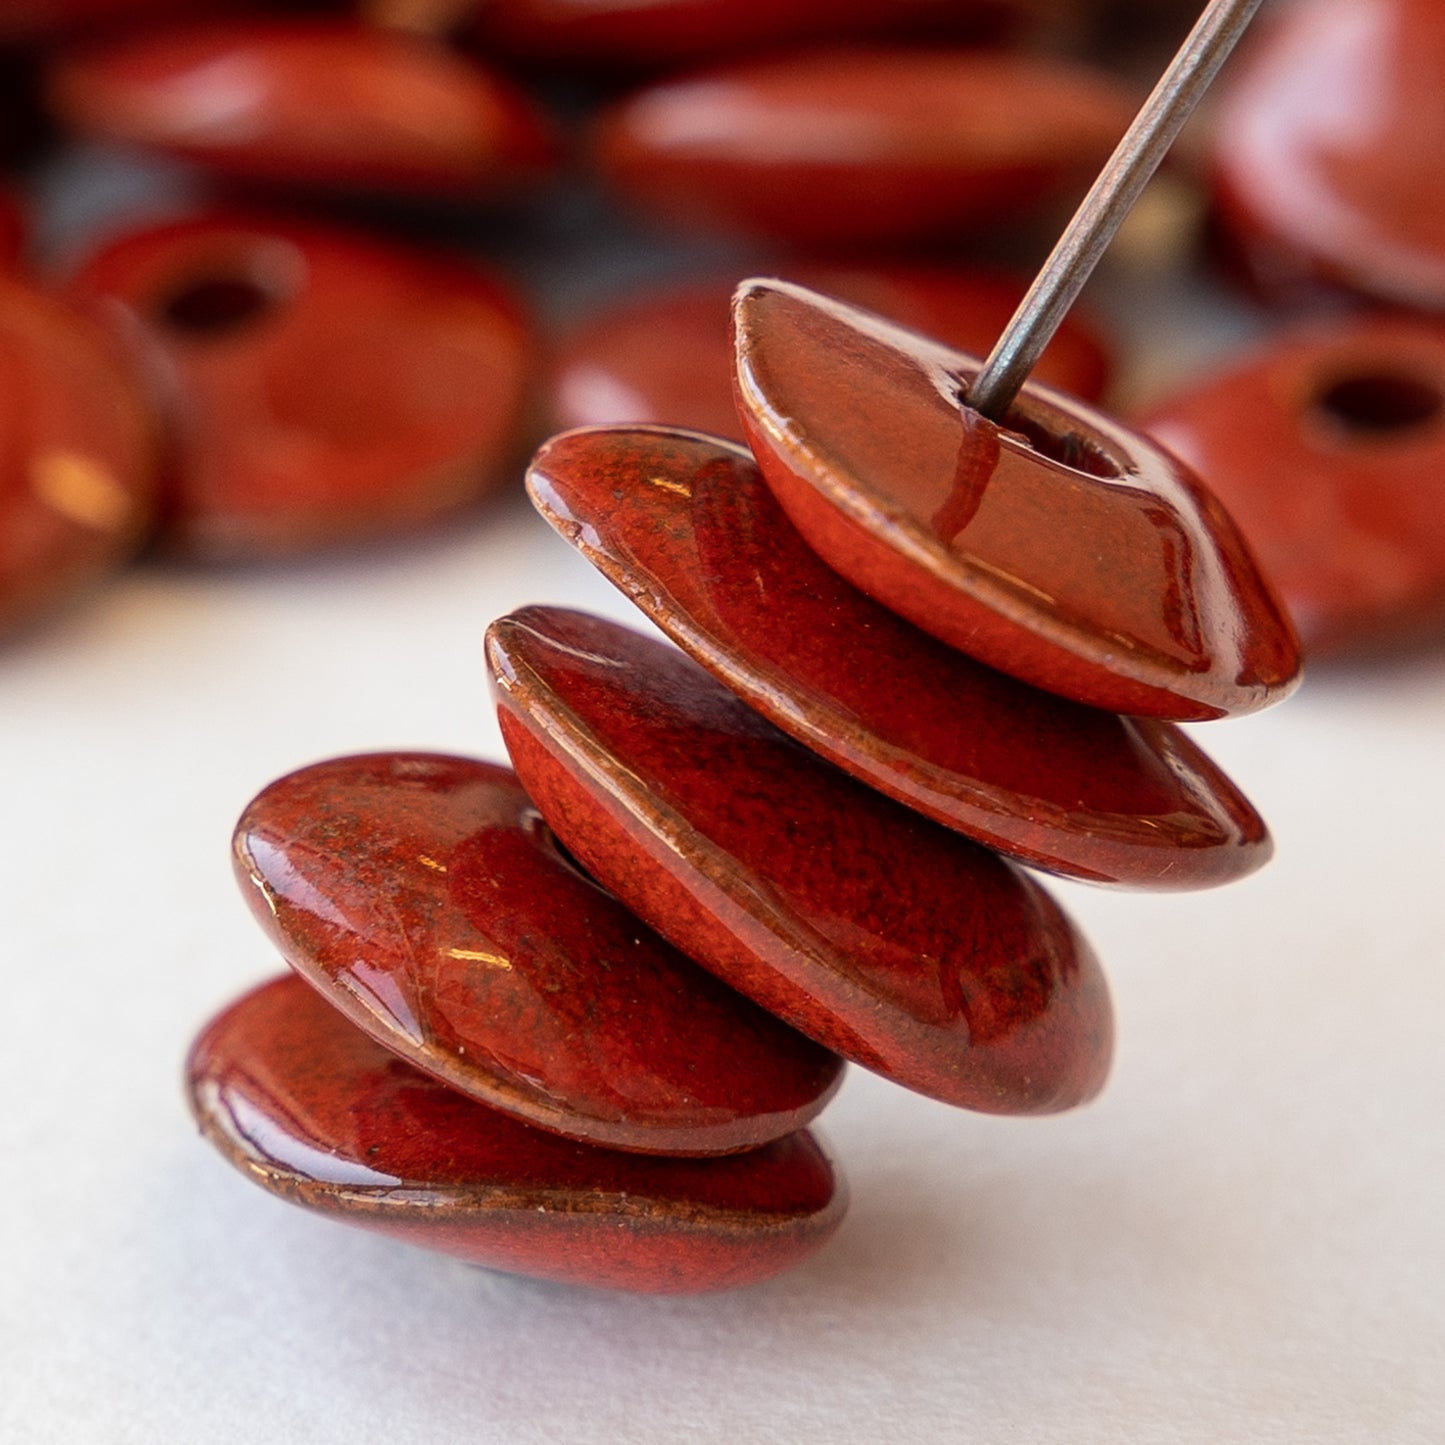 13-18mm Shiny Glazed Ceramic Disk Beads - Crimson Red - 10 or 30